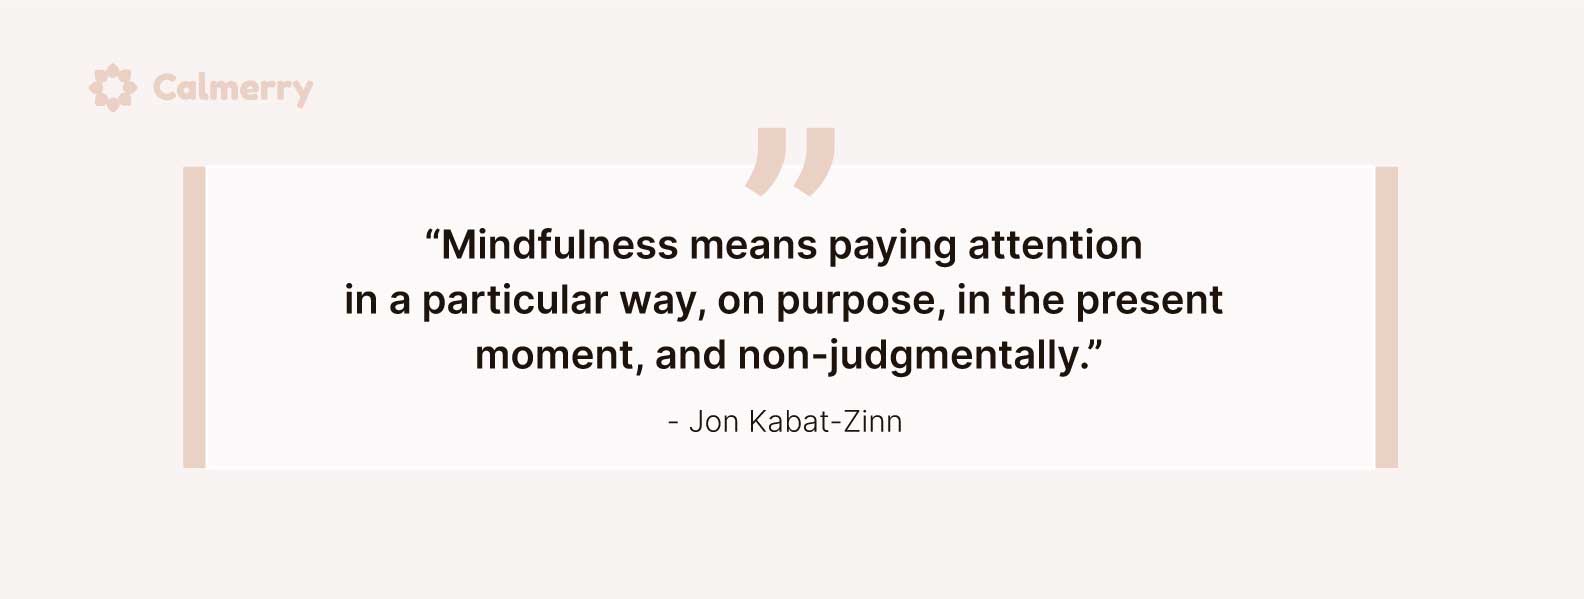 mindfulness kabat zinn quote